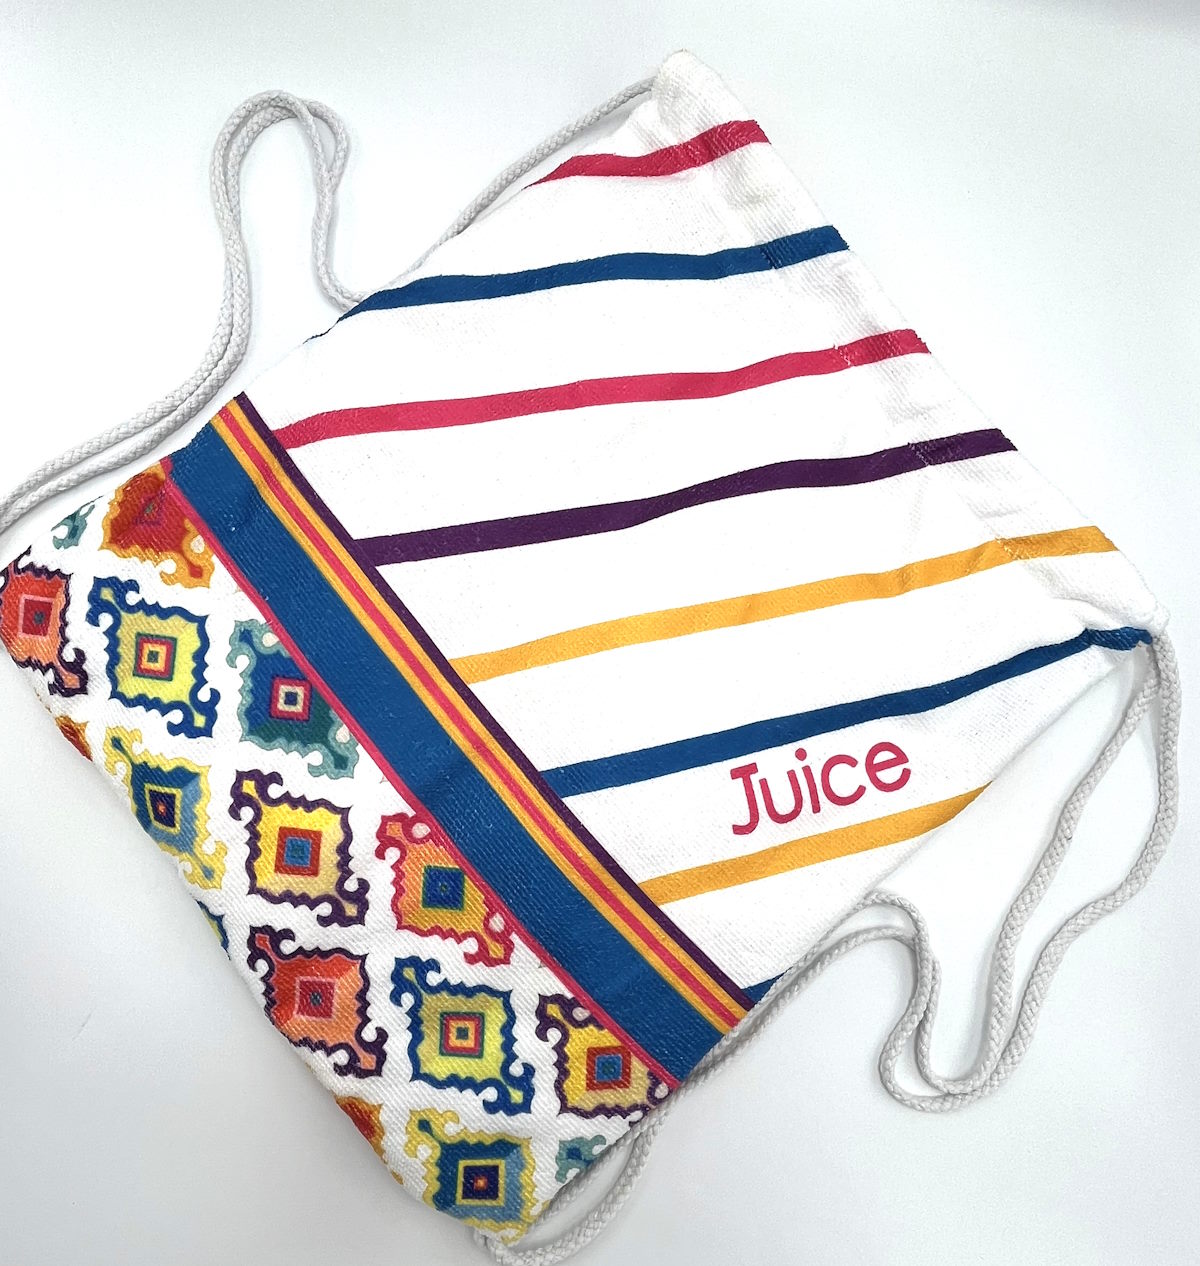 Transformable beach towel/Drawstring Bag, art. 201908